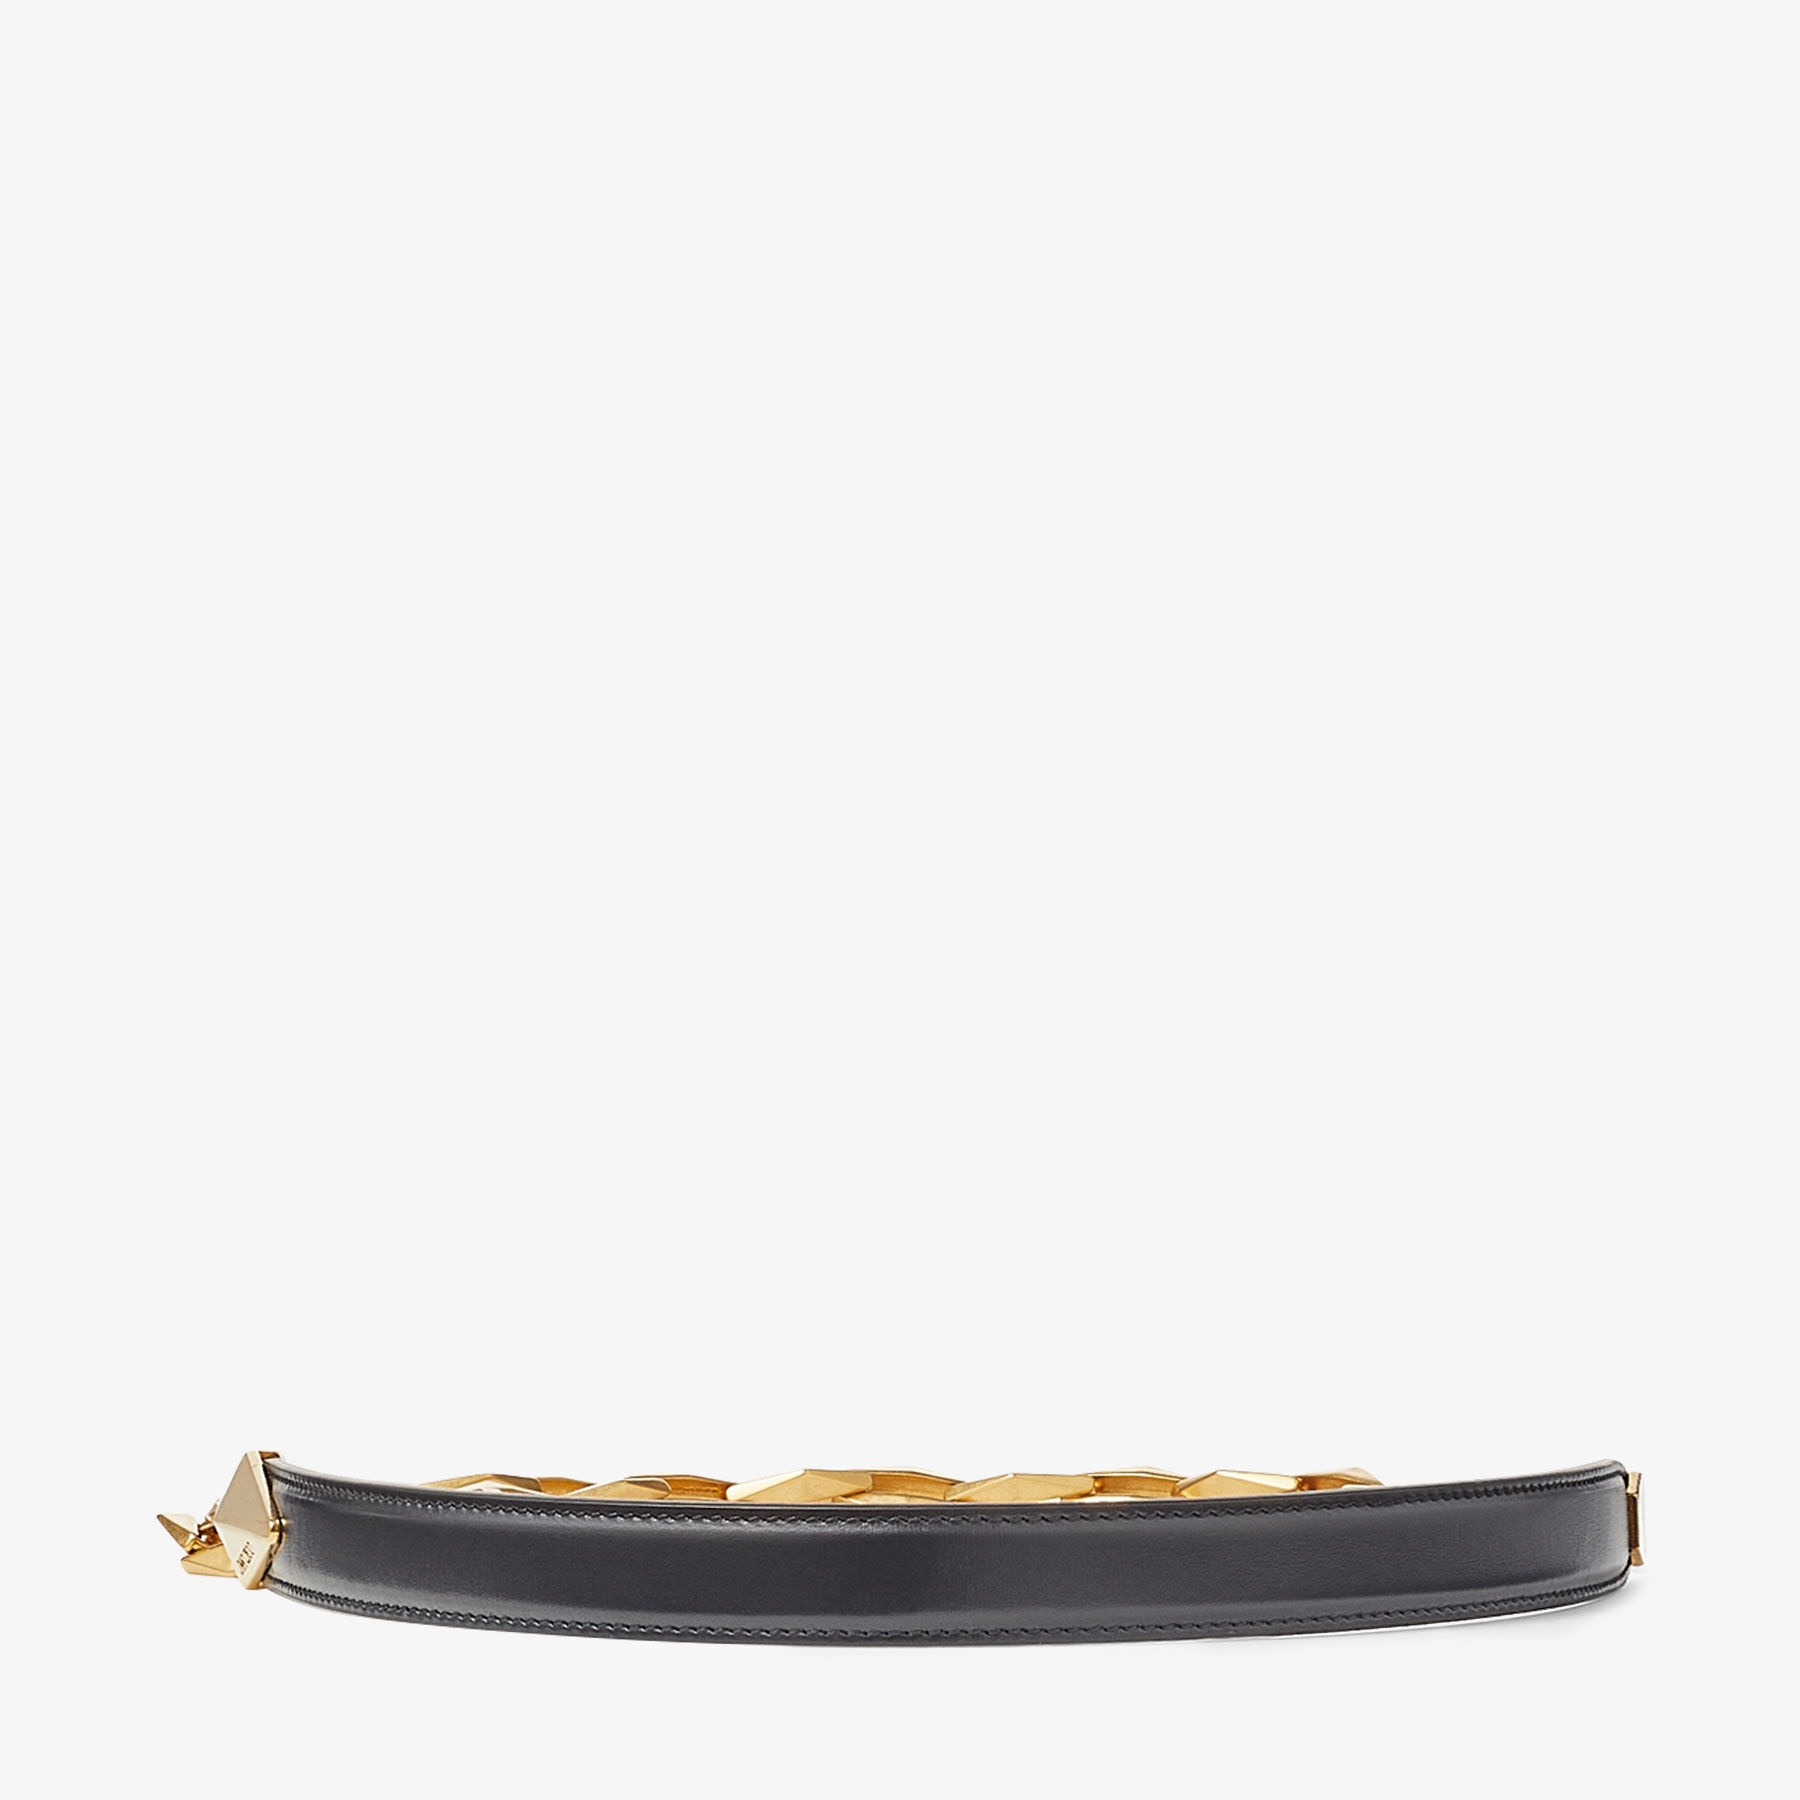 Diamond Chain Belt/S
Black Leather Chain Belt - 5